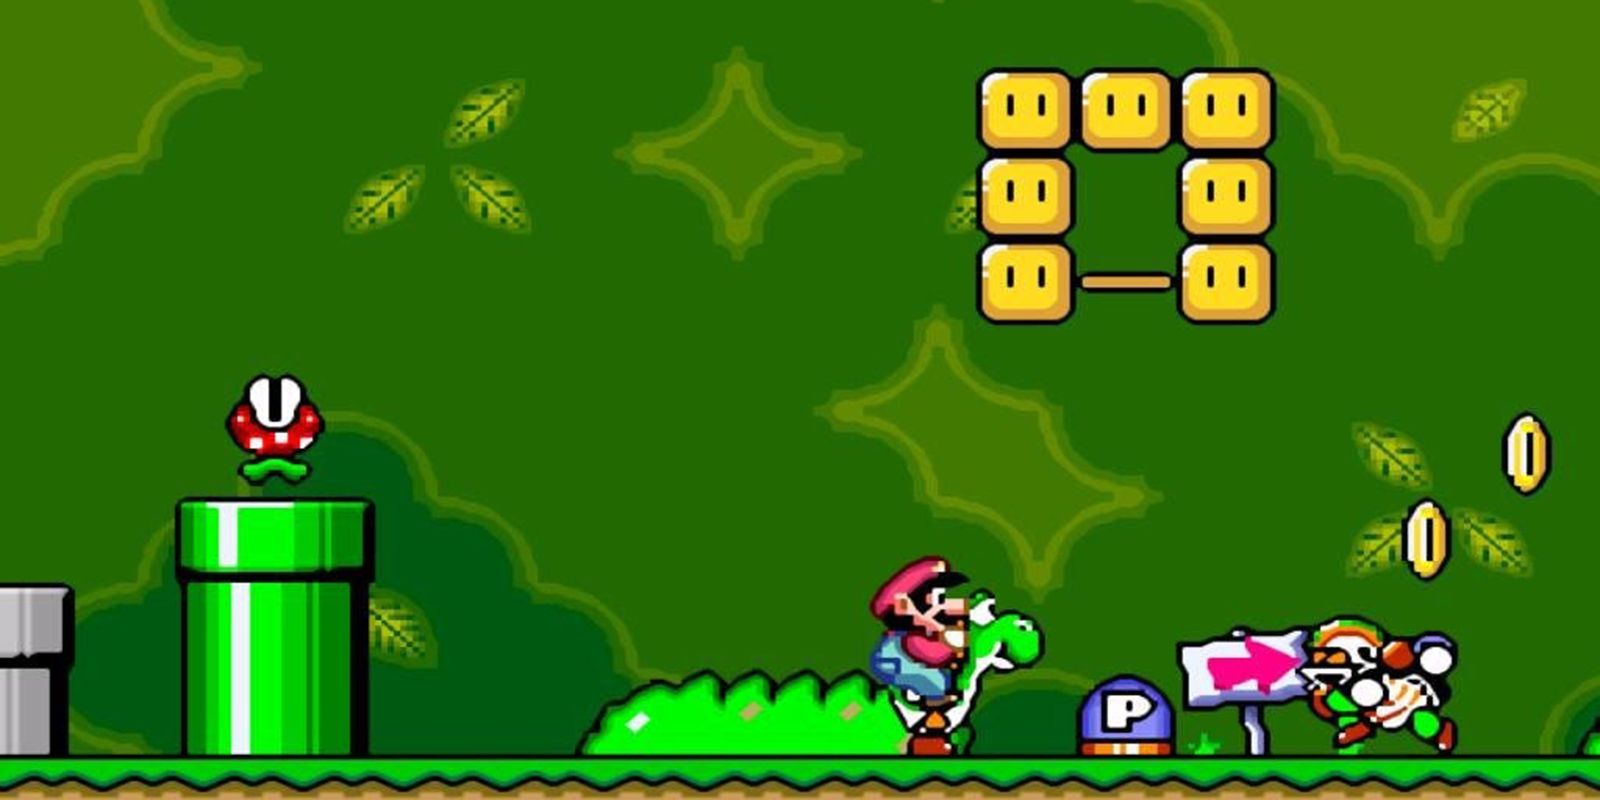 A level in Super Mario World, with Mario riding Yoshi, a Chargin' Chuck, and a Piranha Plant